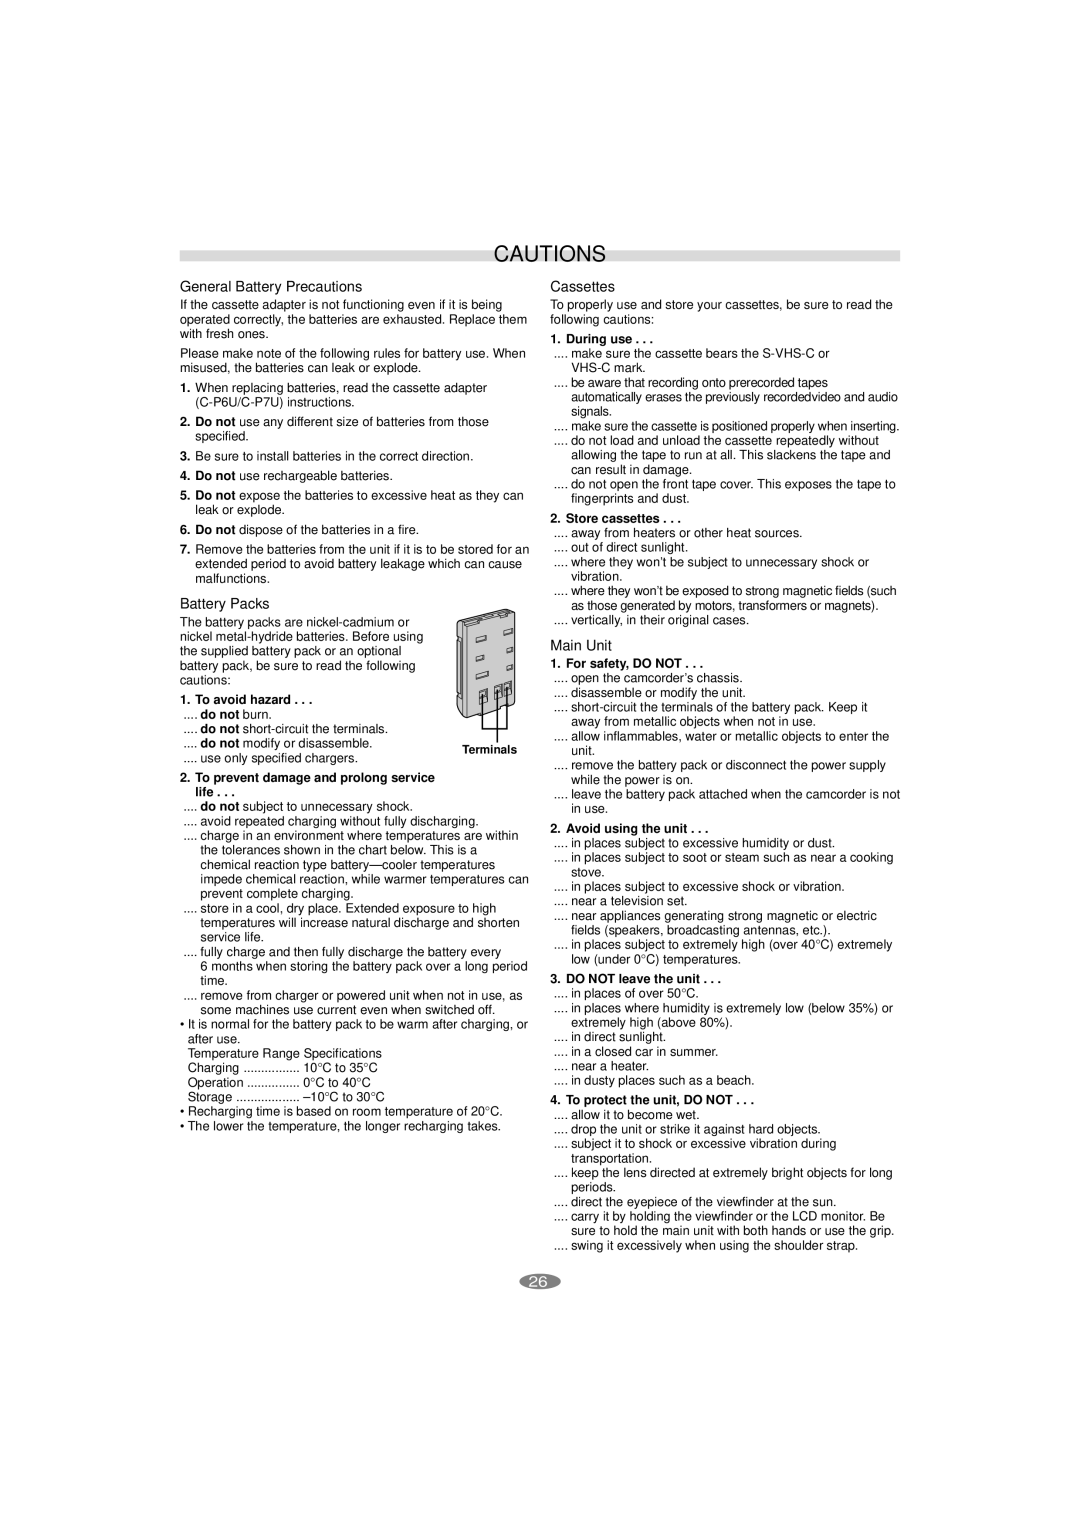 JVC GR-SXM195AS, LYT1133-001A manual General Battery Precautions, Battery Packs, Cassettes, Main Unit 